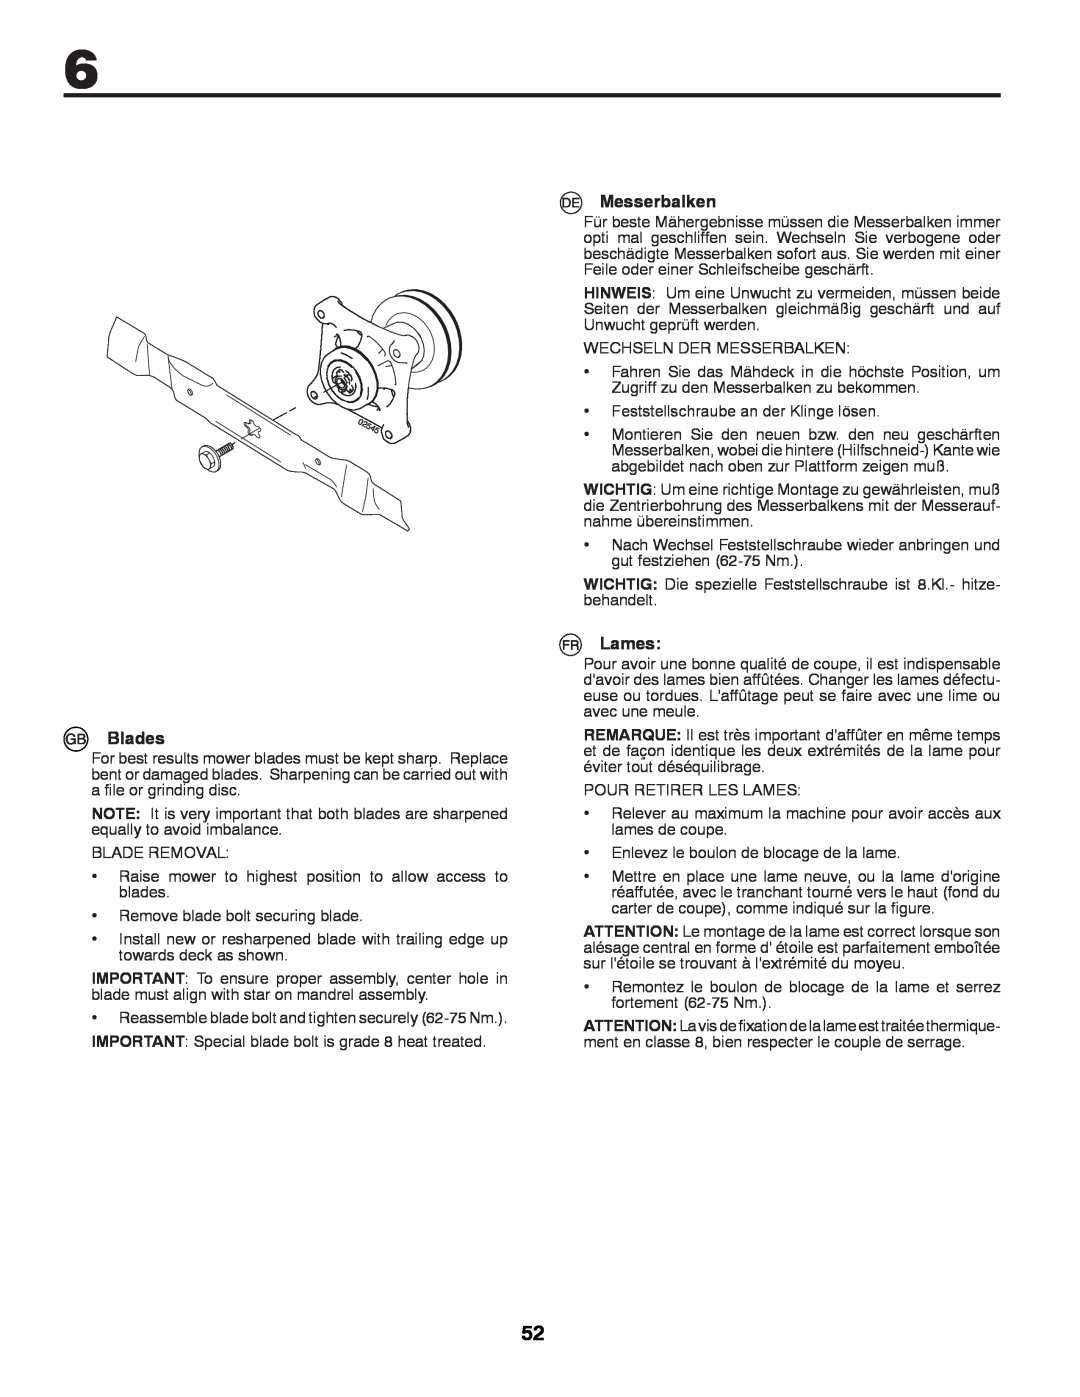 McCulloch 532 43 42-91 Rev. 1 instruction manual Blades, Messerbalken, Lames 